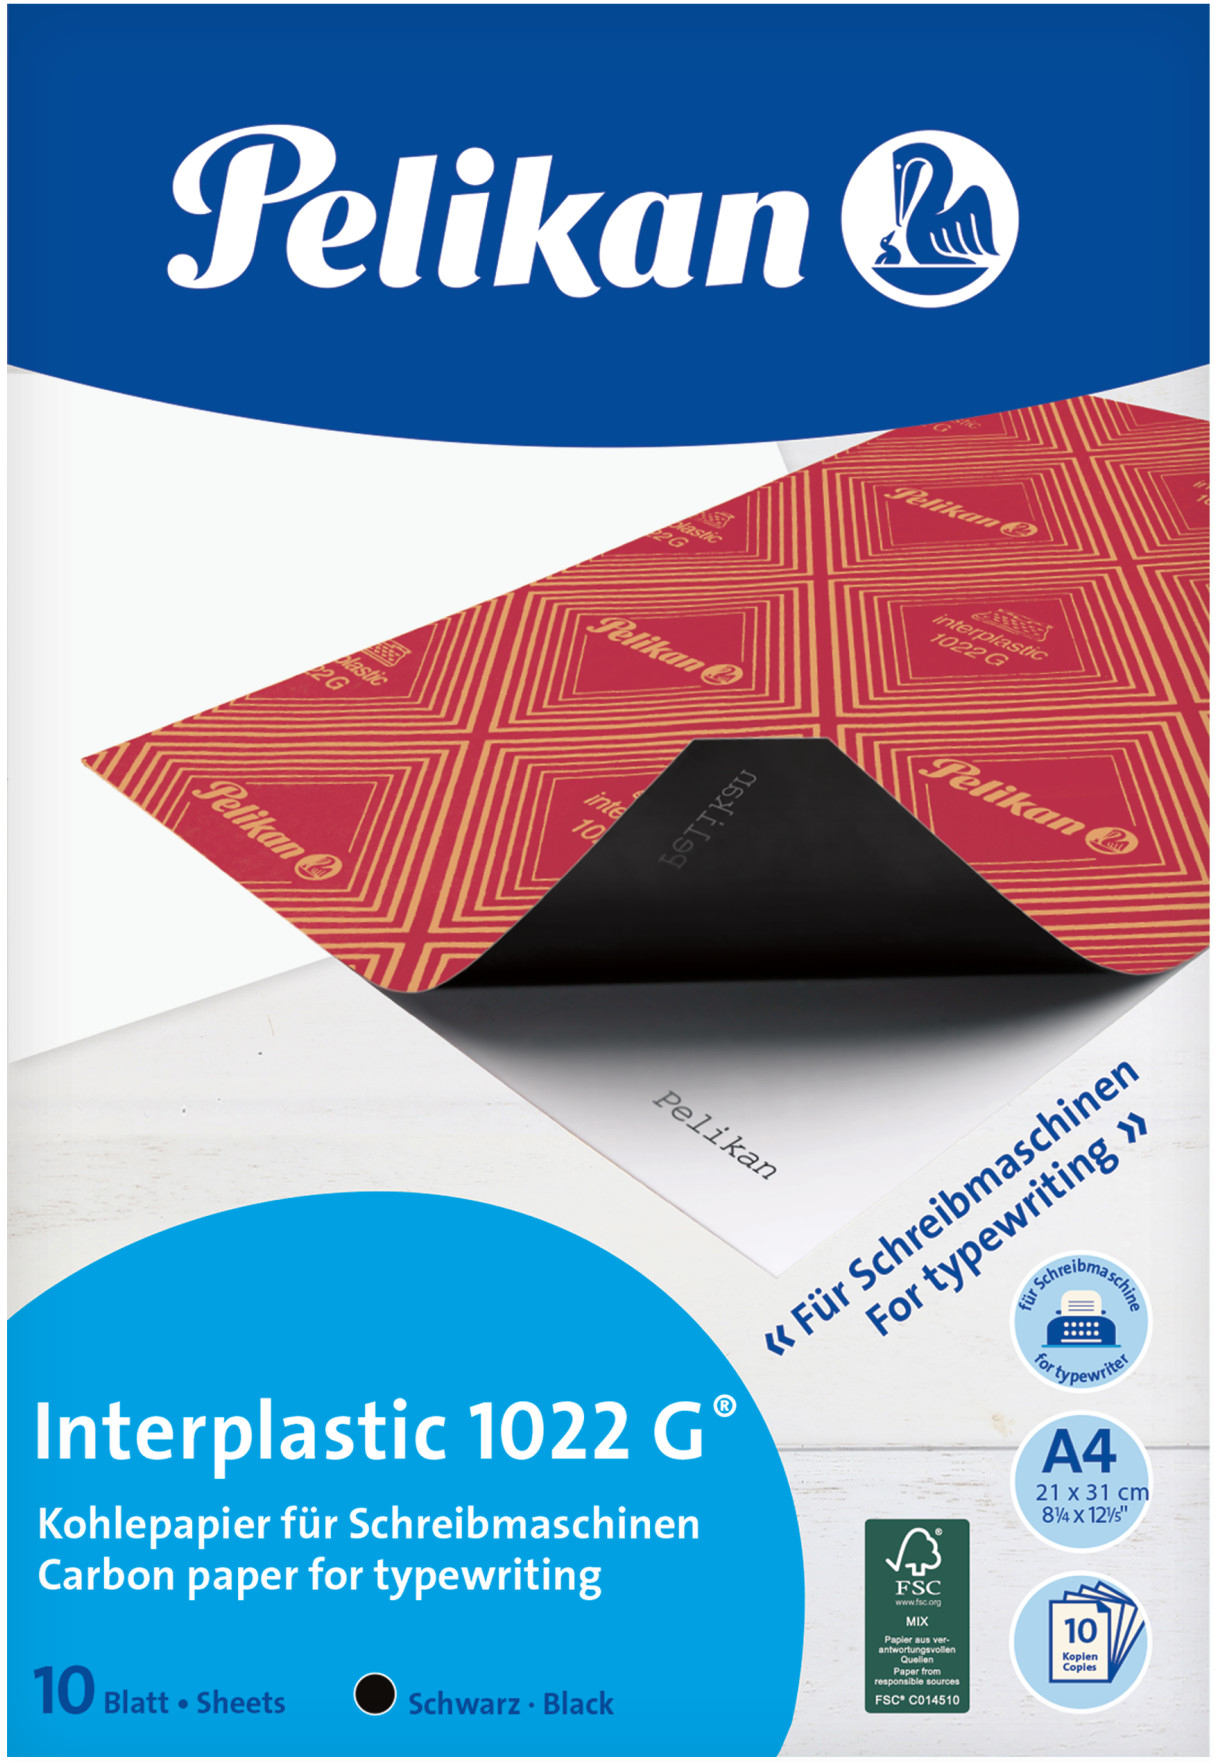 PELIKAN Kohlepapiere 1022G A4 401026 interplastic 10 Blatt